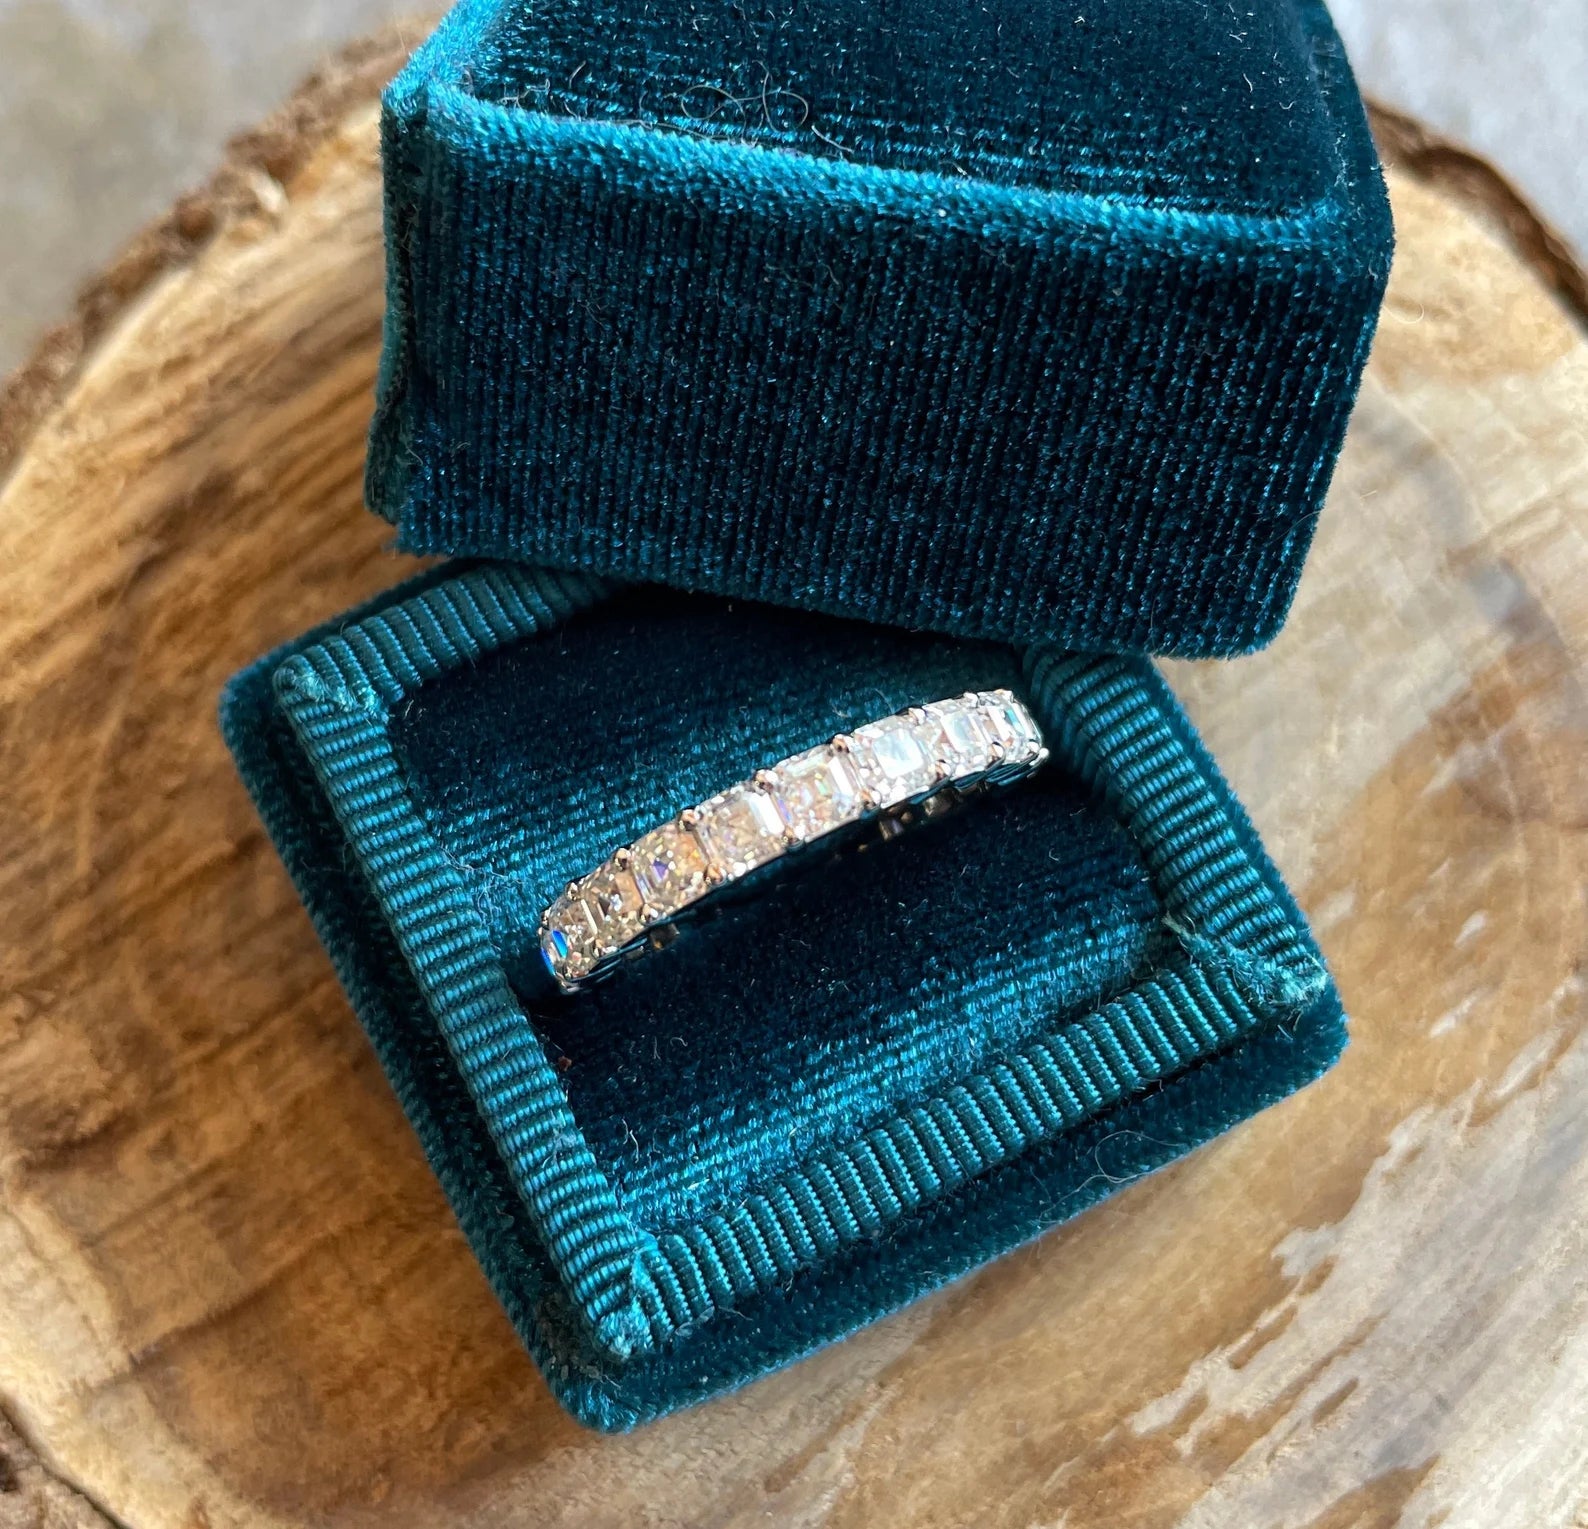 portia ring – 3 carat asscher cut ZAYA moissanite eternity band, wedding ring - J Hollywood Designs